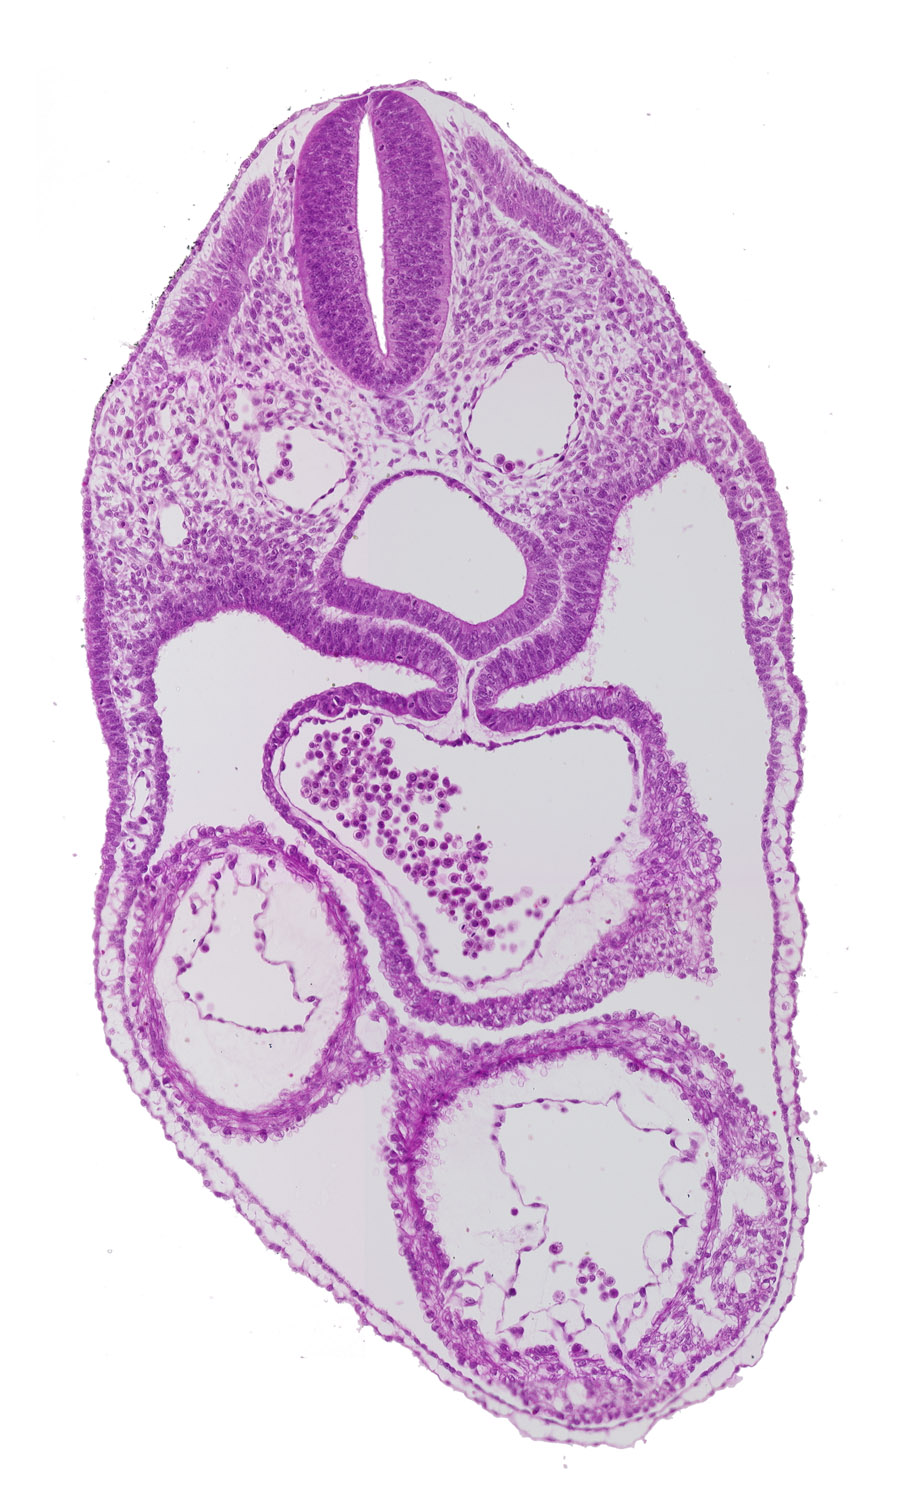 common atrium, dermatomyotome 4 (O-4) , dorsal aorta, ectodermal ring, foregut, laryngotracheal groove, mesocardium, pericardial cavity, precardinal vein, rhombencephalon (Rh. D)